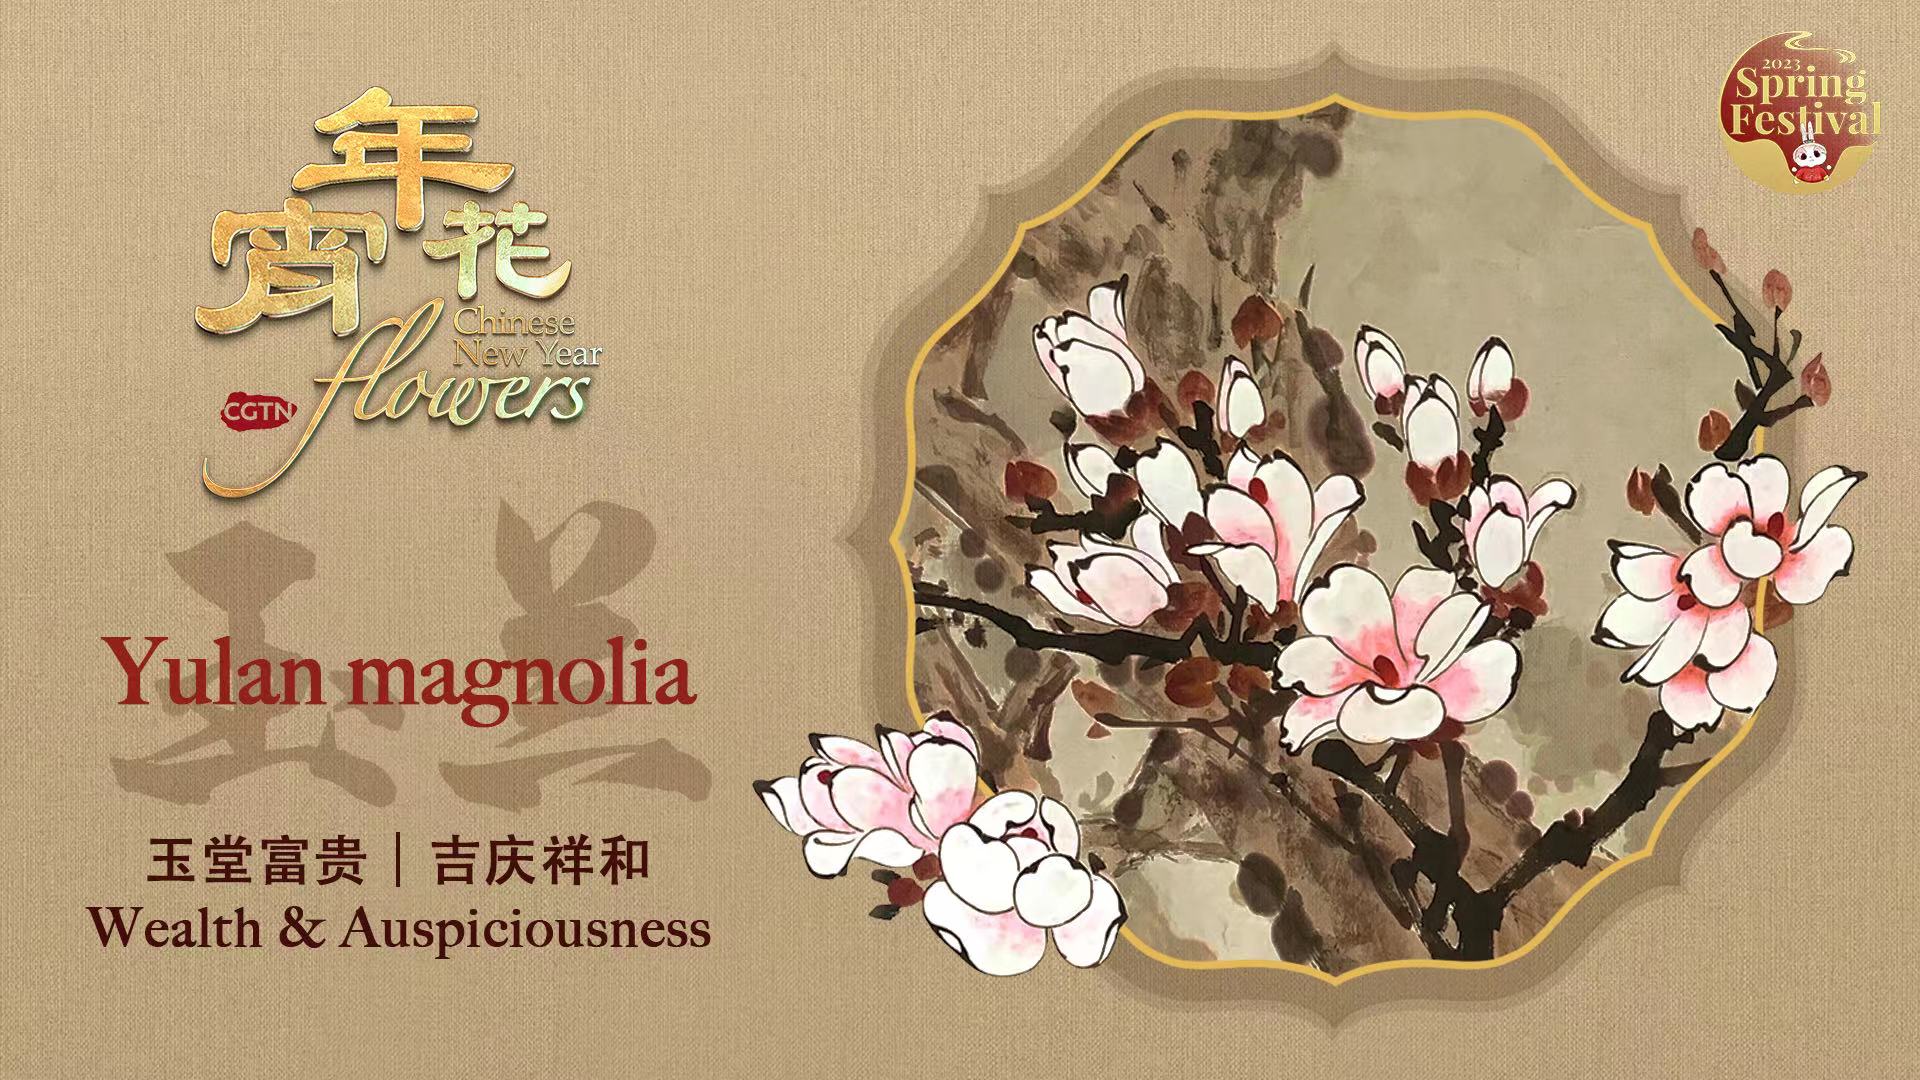 Chinese New Year Flowers: Yulan magnolia